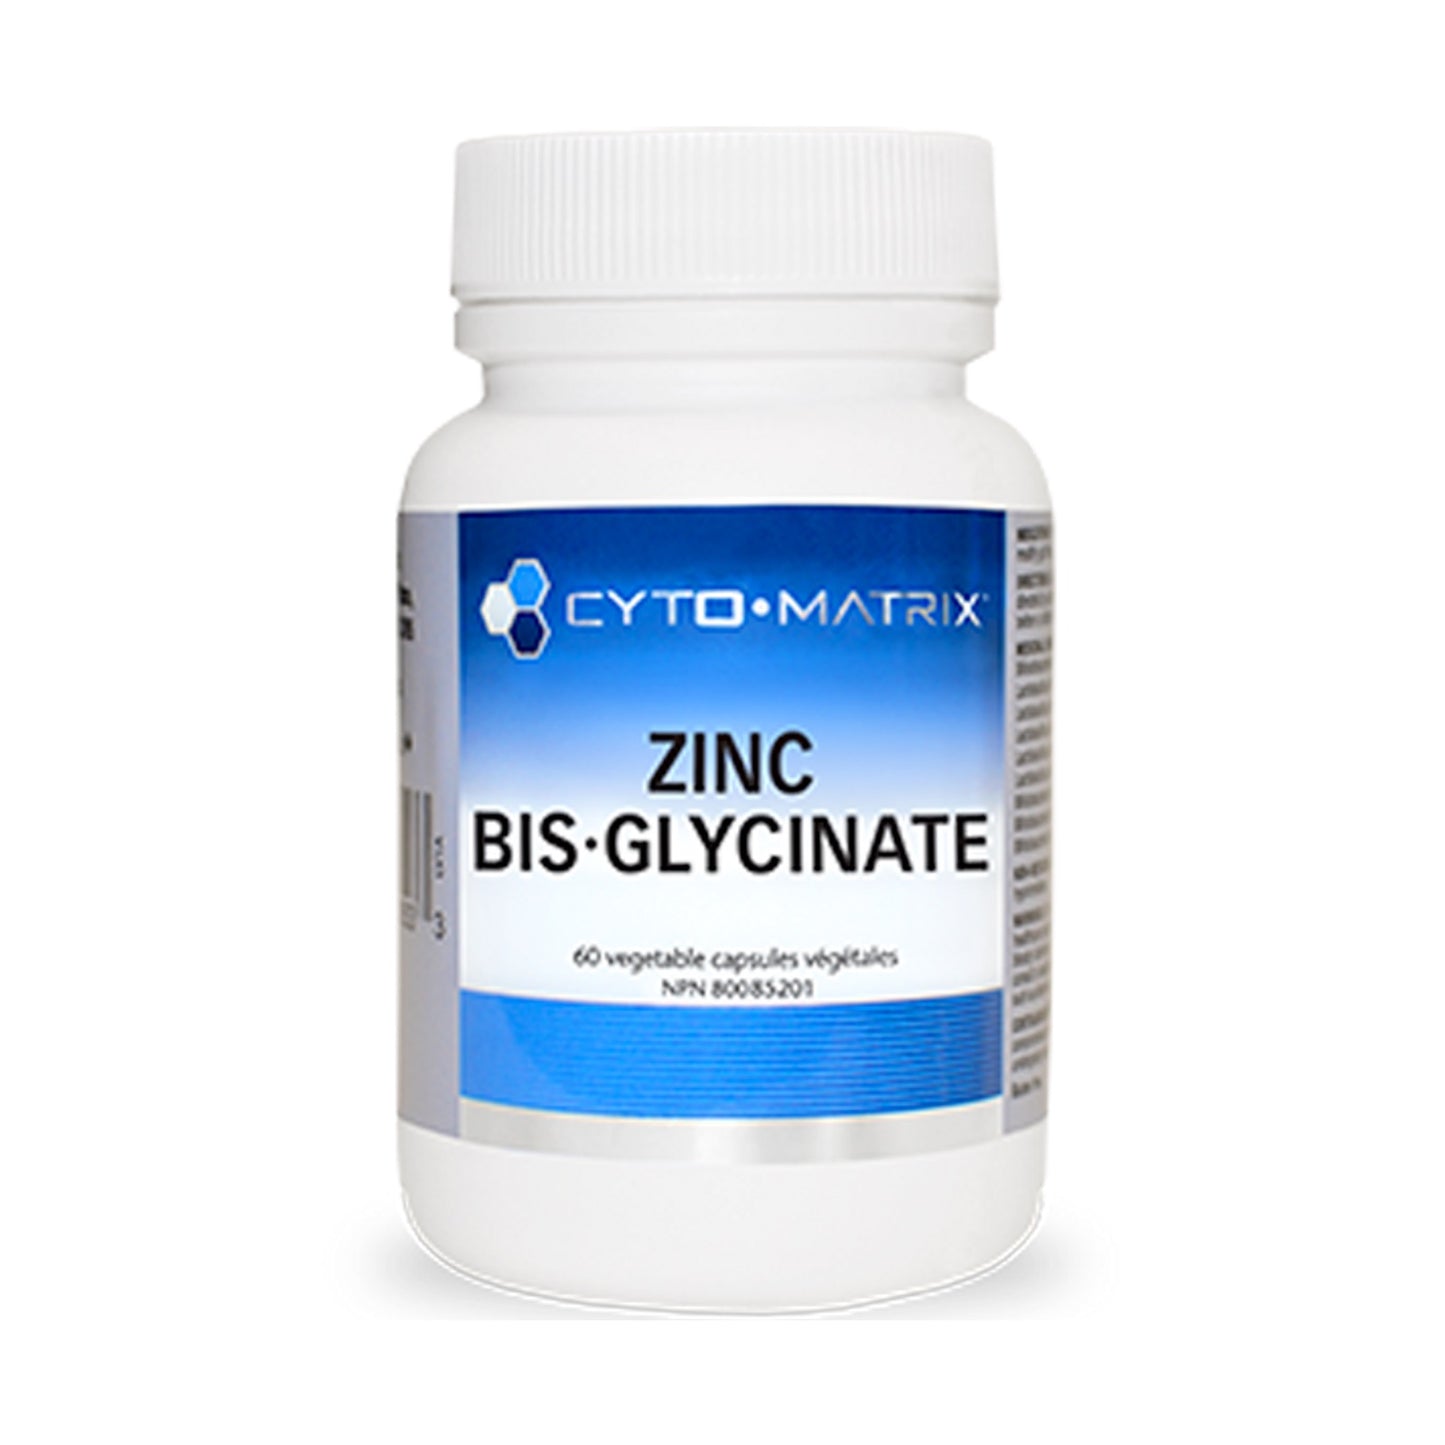 Cyto-Matrix Zinc Bis-Glycinate 60 Vegetable Capsules